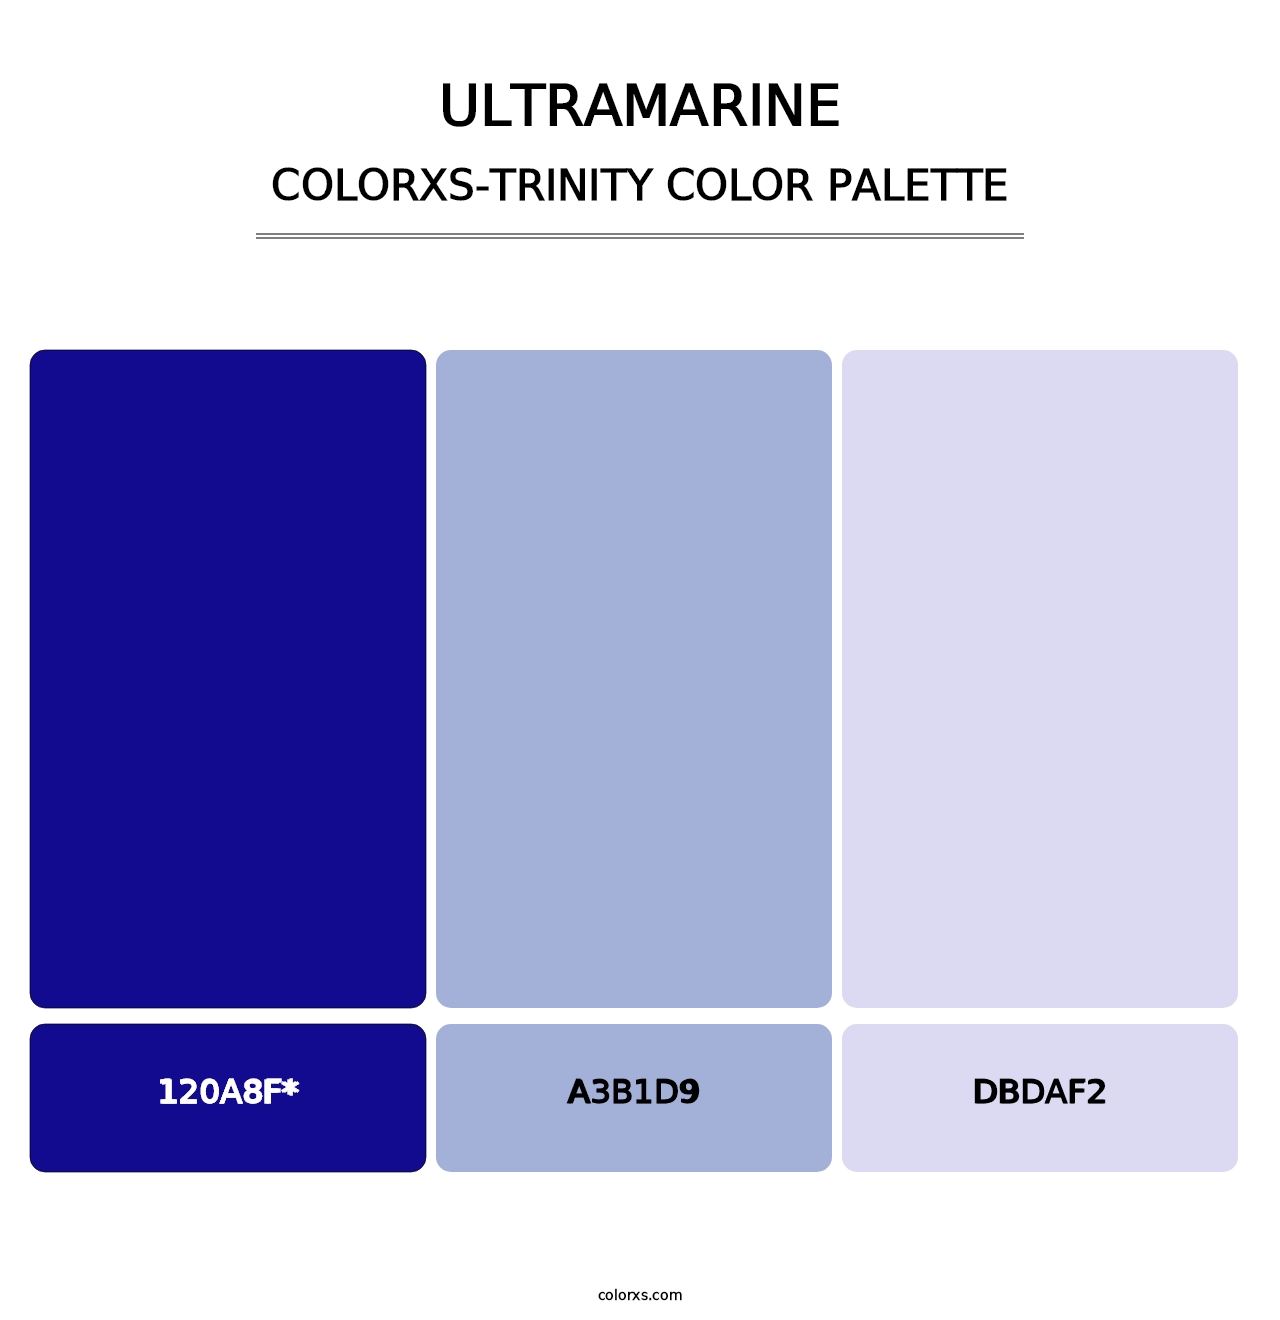 Ultramarine - Colorxs Trinity Palette